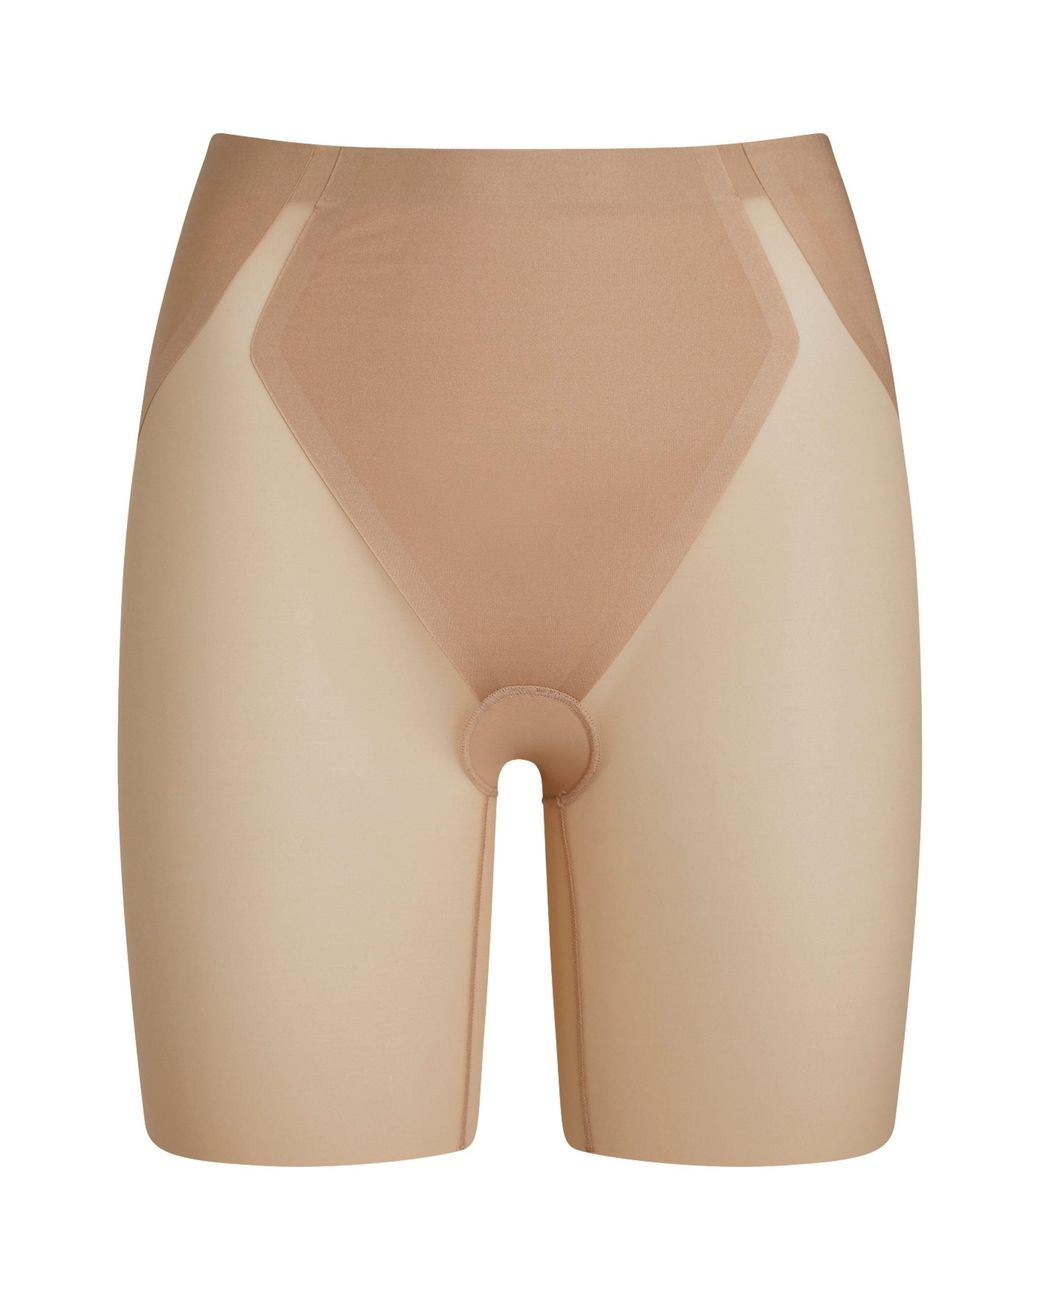 https://cdna.lystit.com/1040/1300/n/photos/harrods/fed678c6/spanx-beige-Haute-Contour-Mid-thigh-Sculpting-Shorts.jpeg